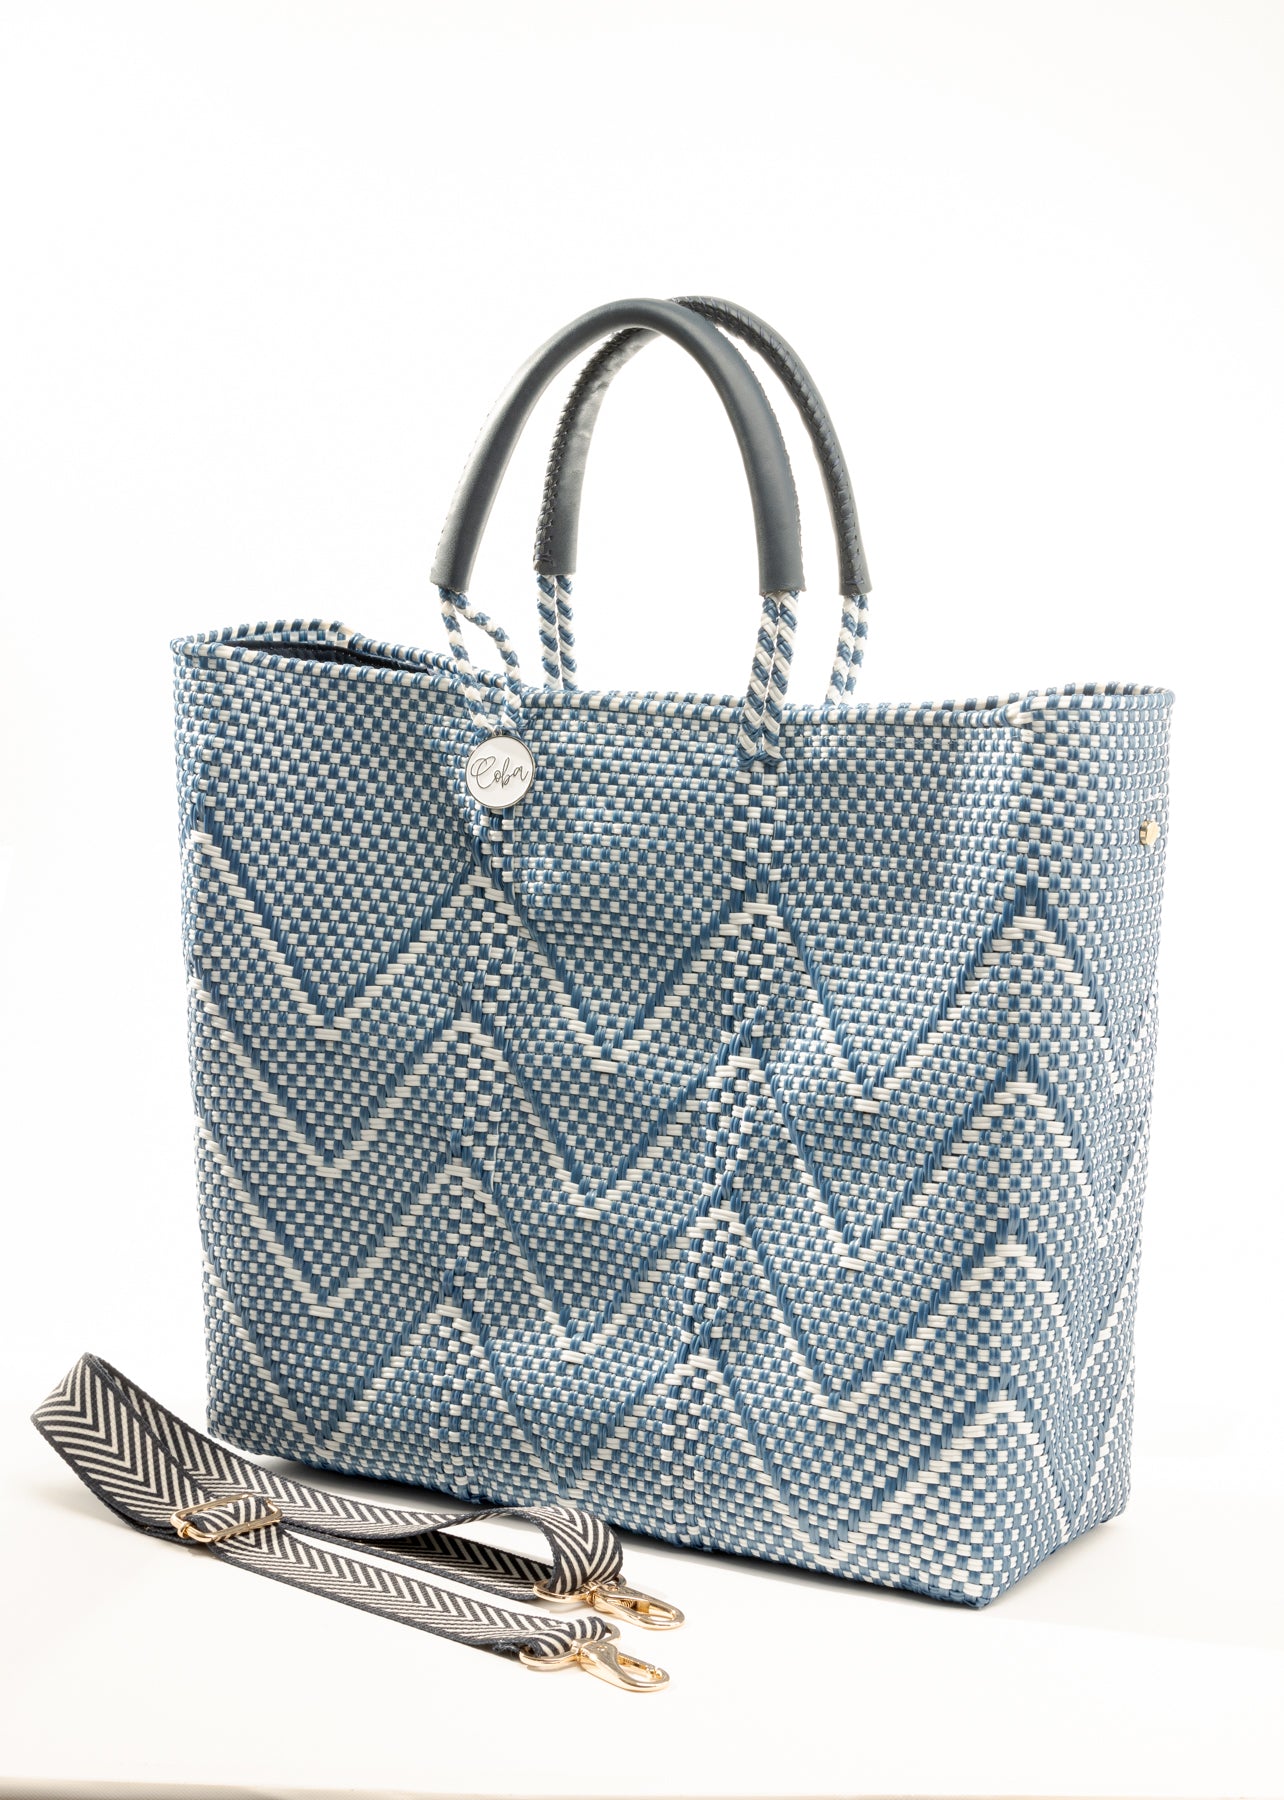 Herringbone pattern purse strap next to blue and white chevron tote bag